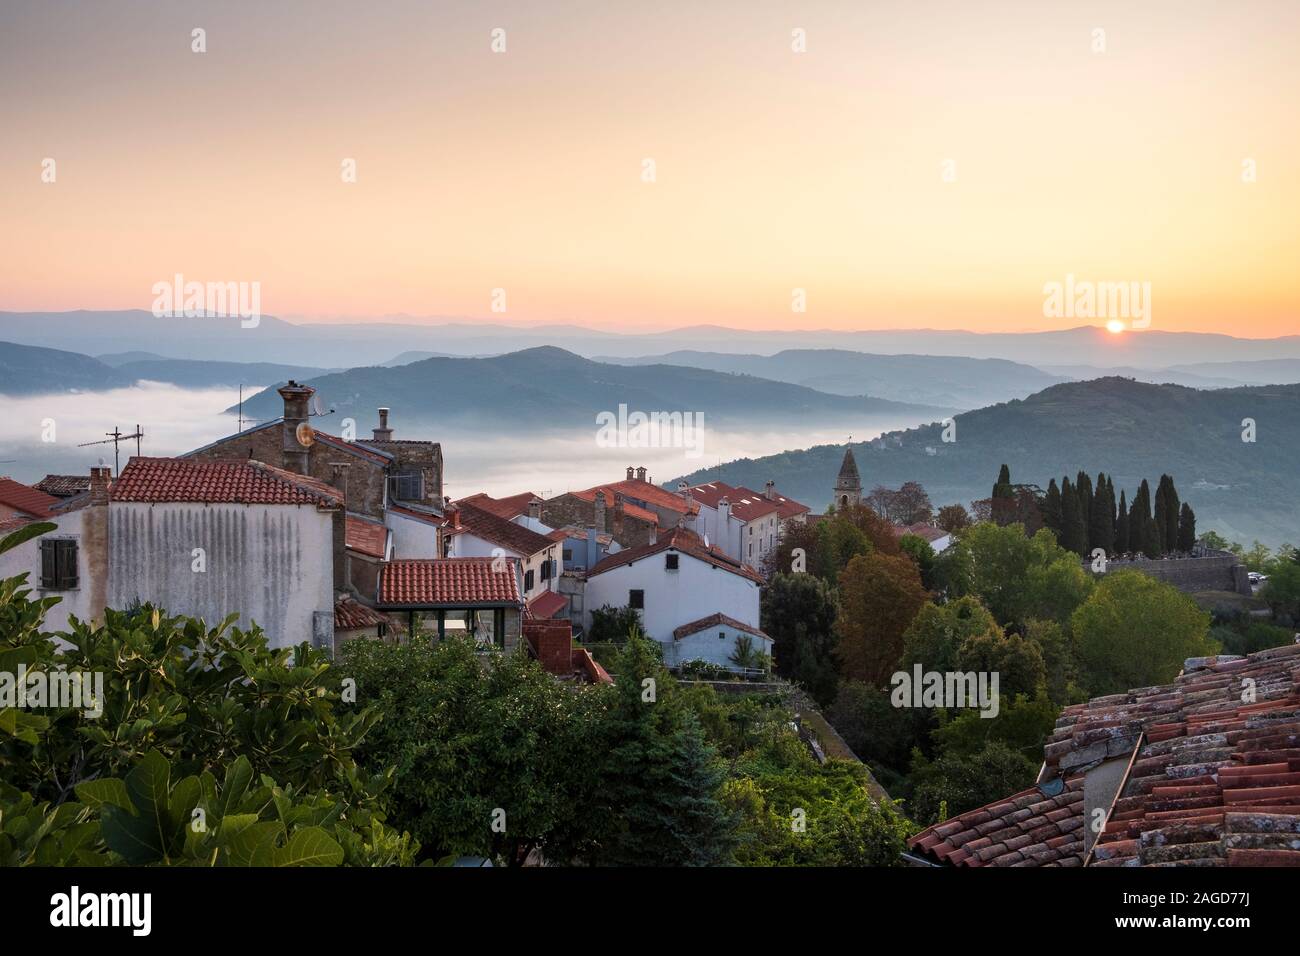 View over Village at sunrise  with surrounding mountains, Motovun, Istria, Croatia Stock Photo